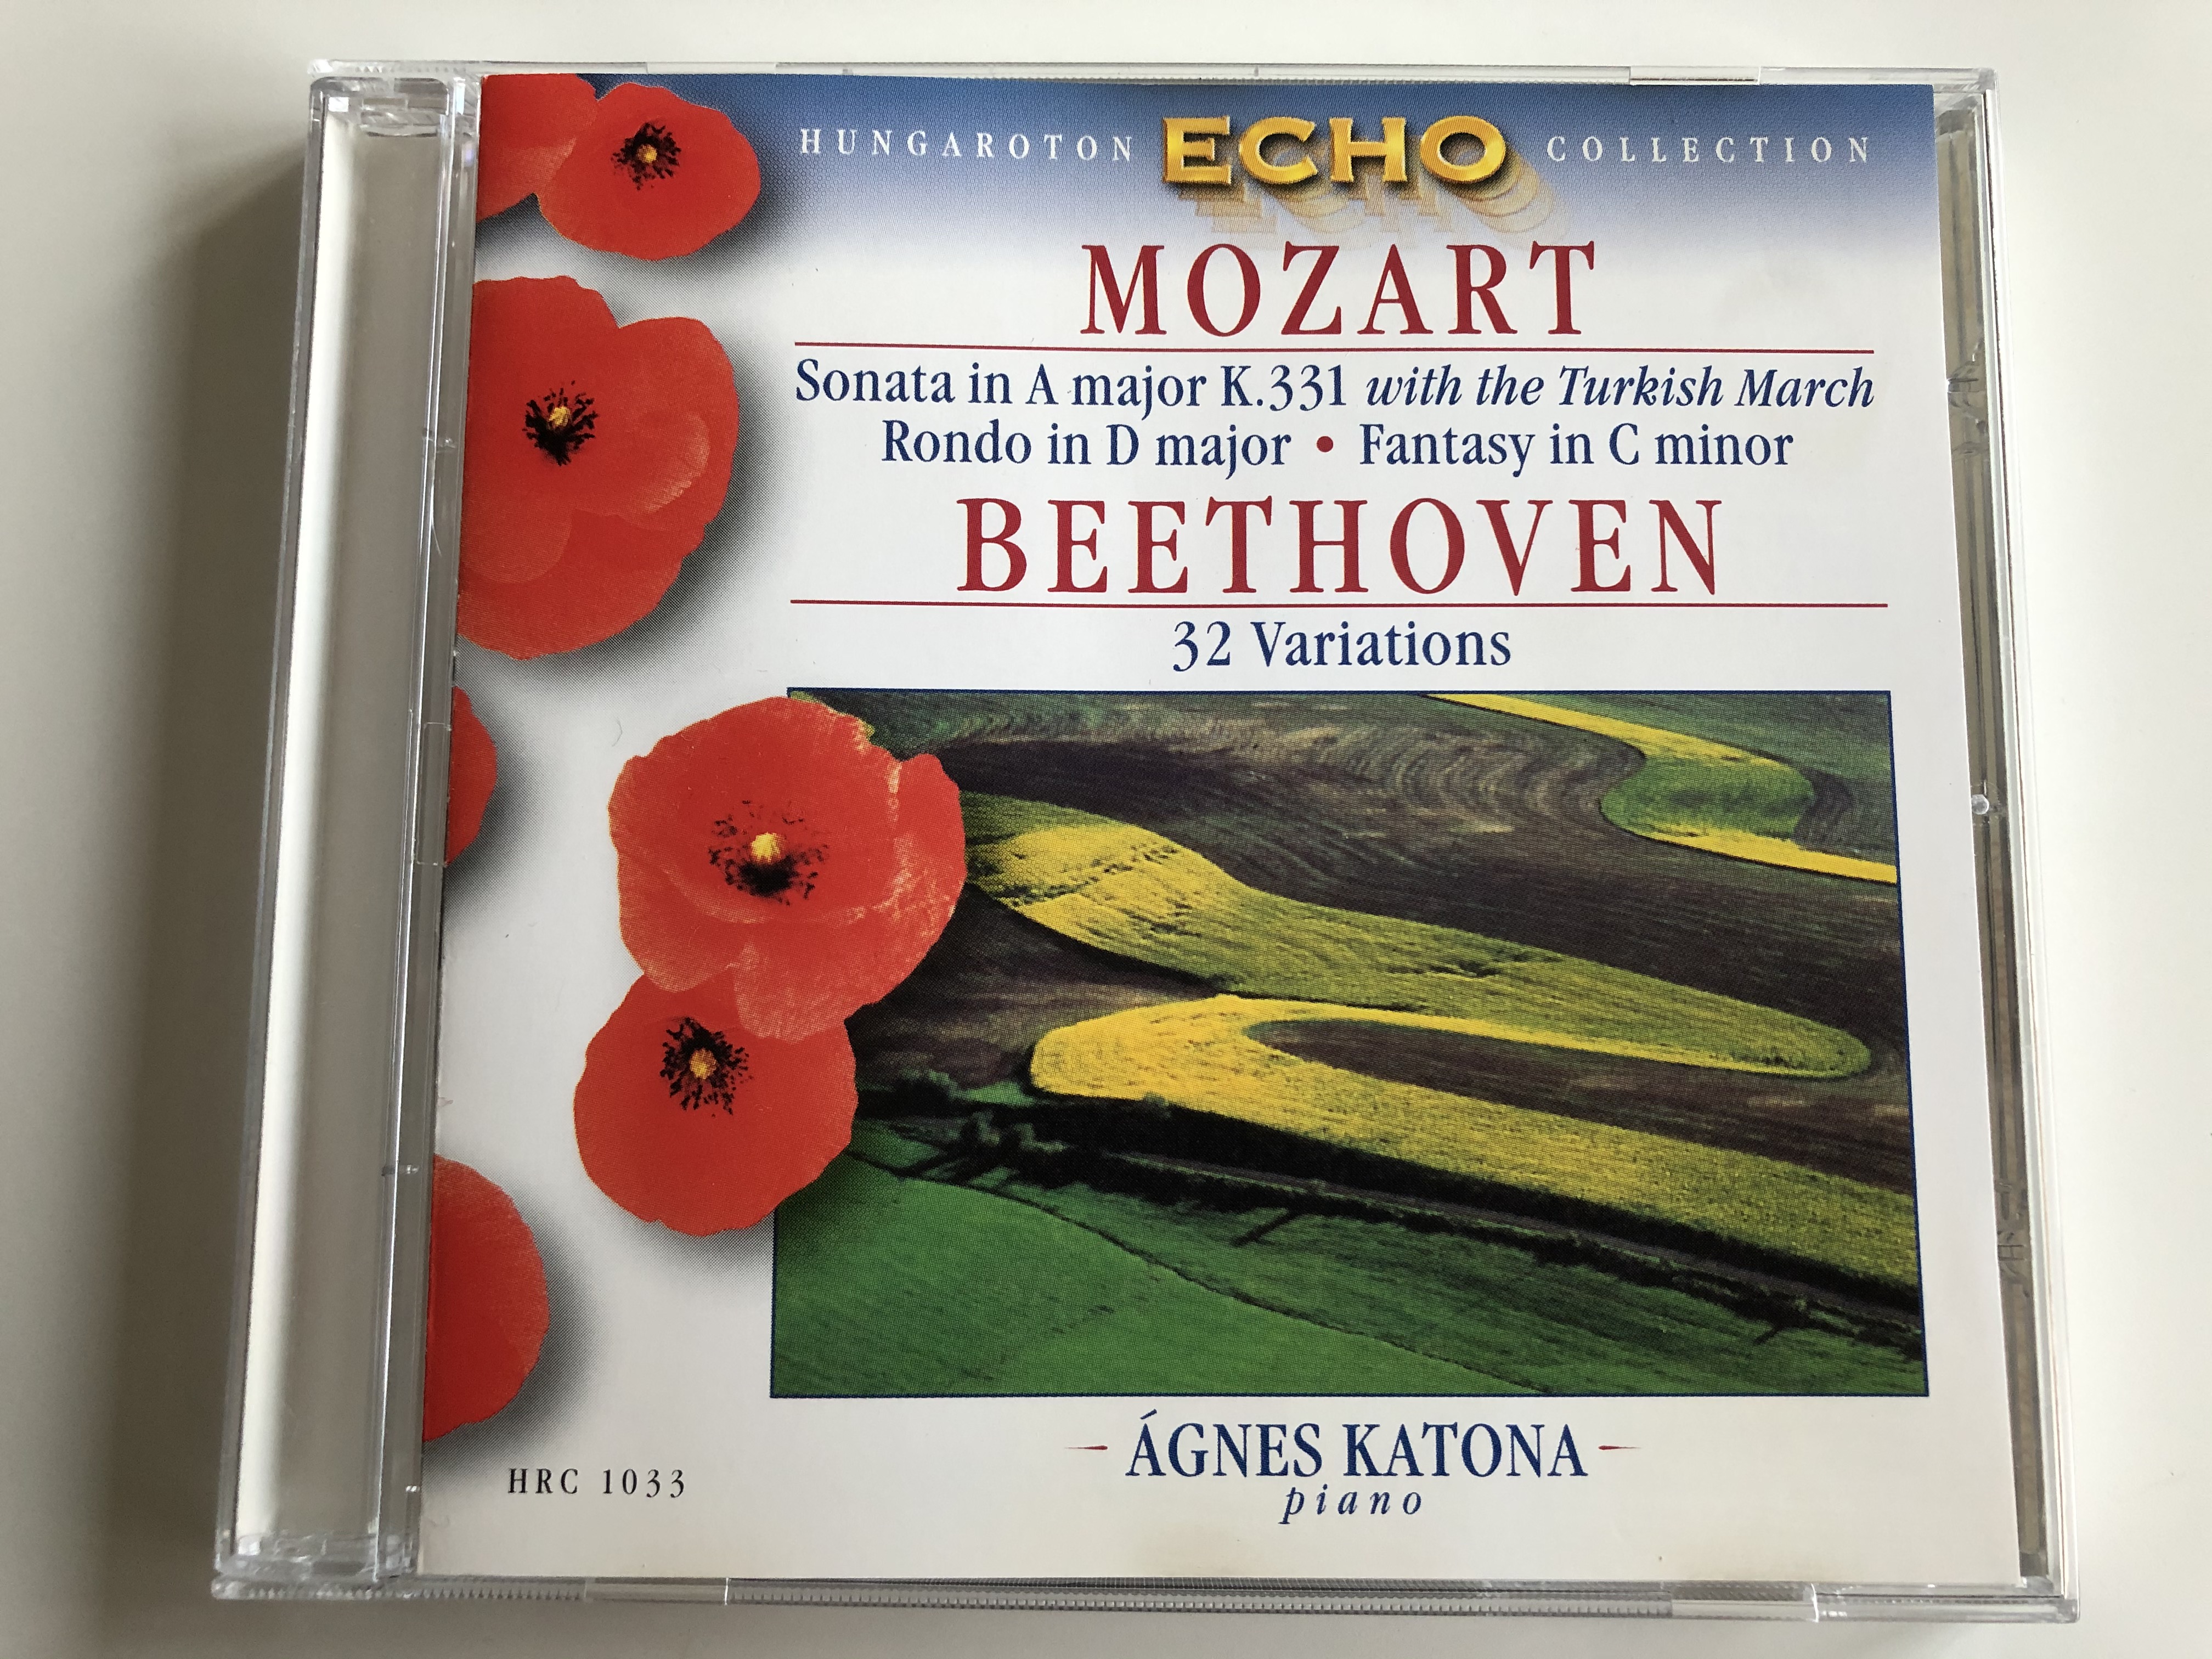 mozart-sonata-in-a-major-k.331-with-the-turkish-march-rondo-in-d-major-fantasy-in-c-minor-beethoven-32-variations-piano-agnes-katona-hungaroton-classic-audio-cd-1963-stereo-hrc-1033-1-.jpg